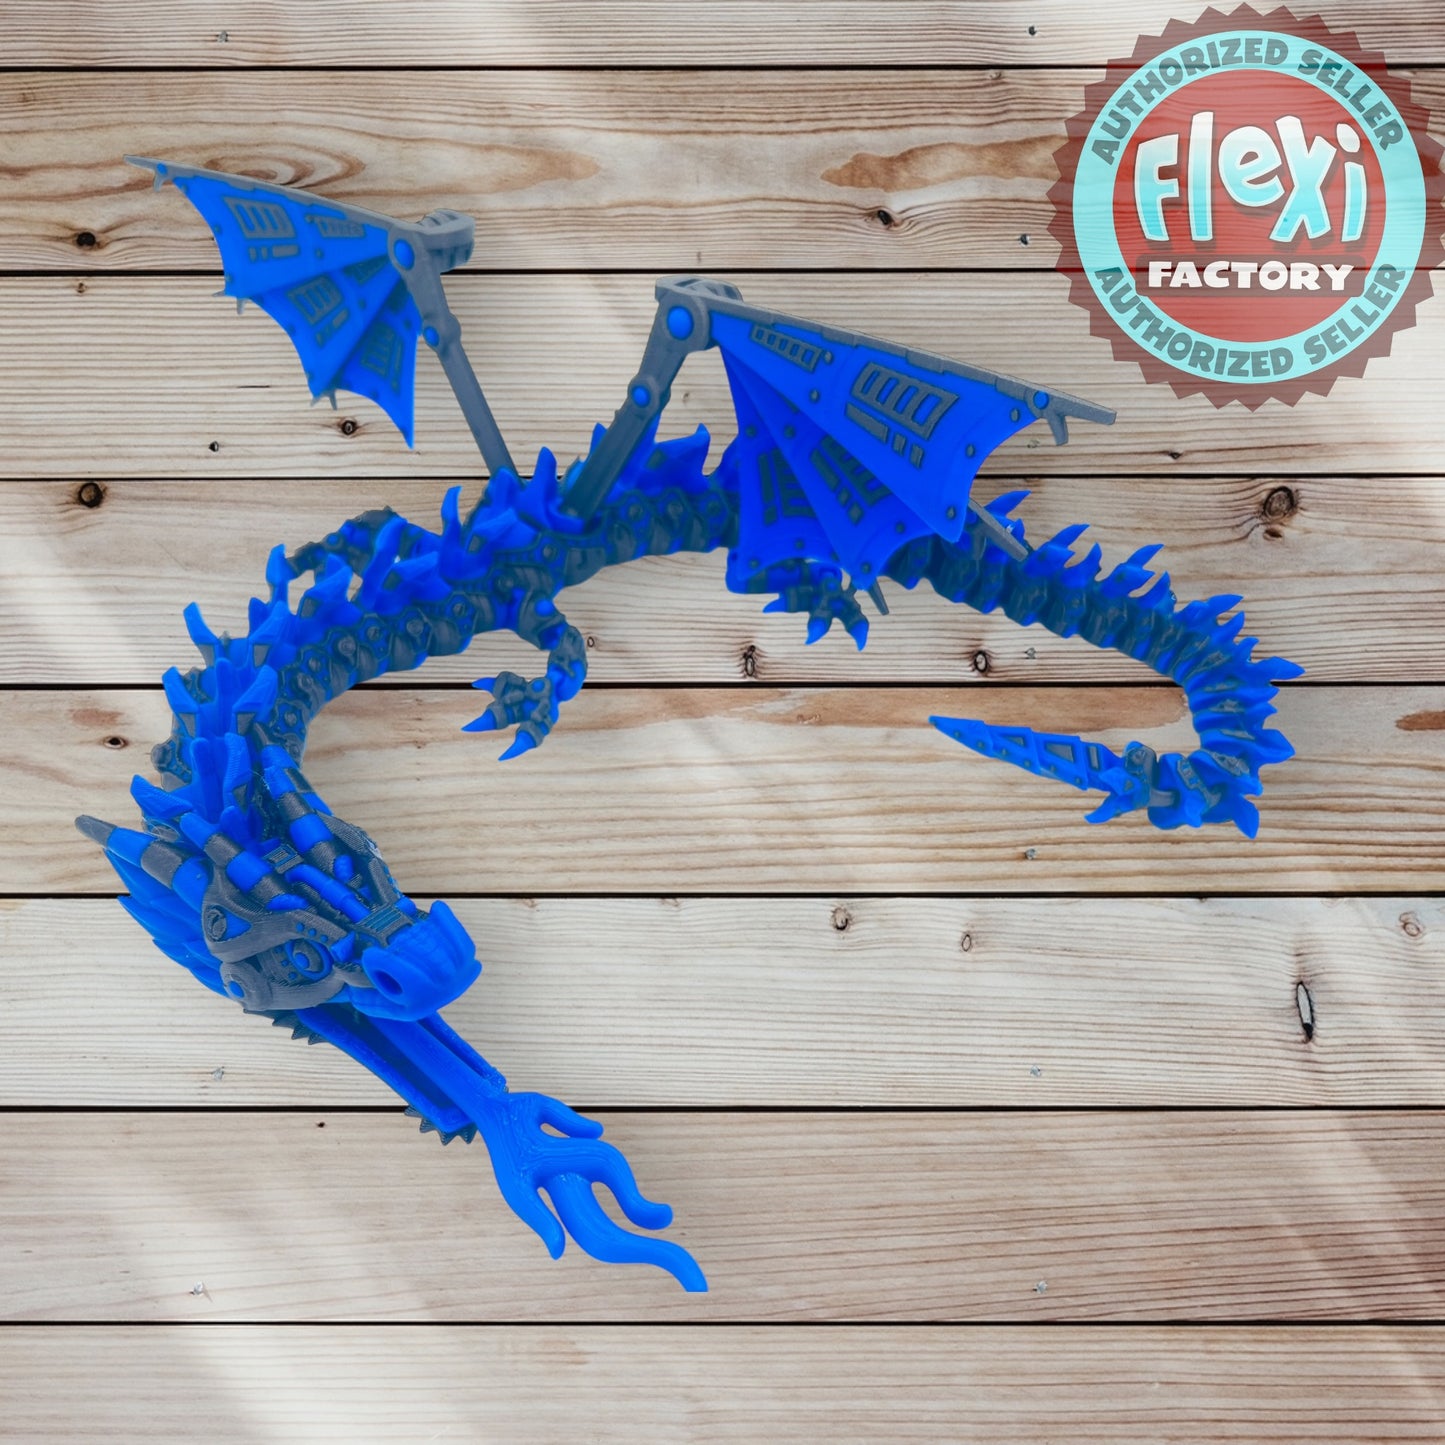 3D Printed Mech Dragon